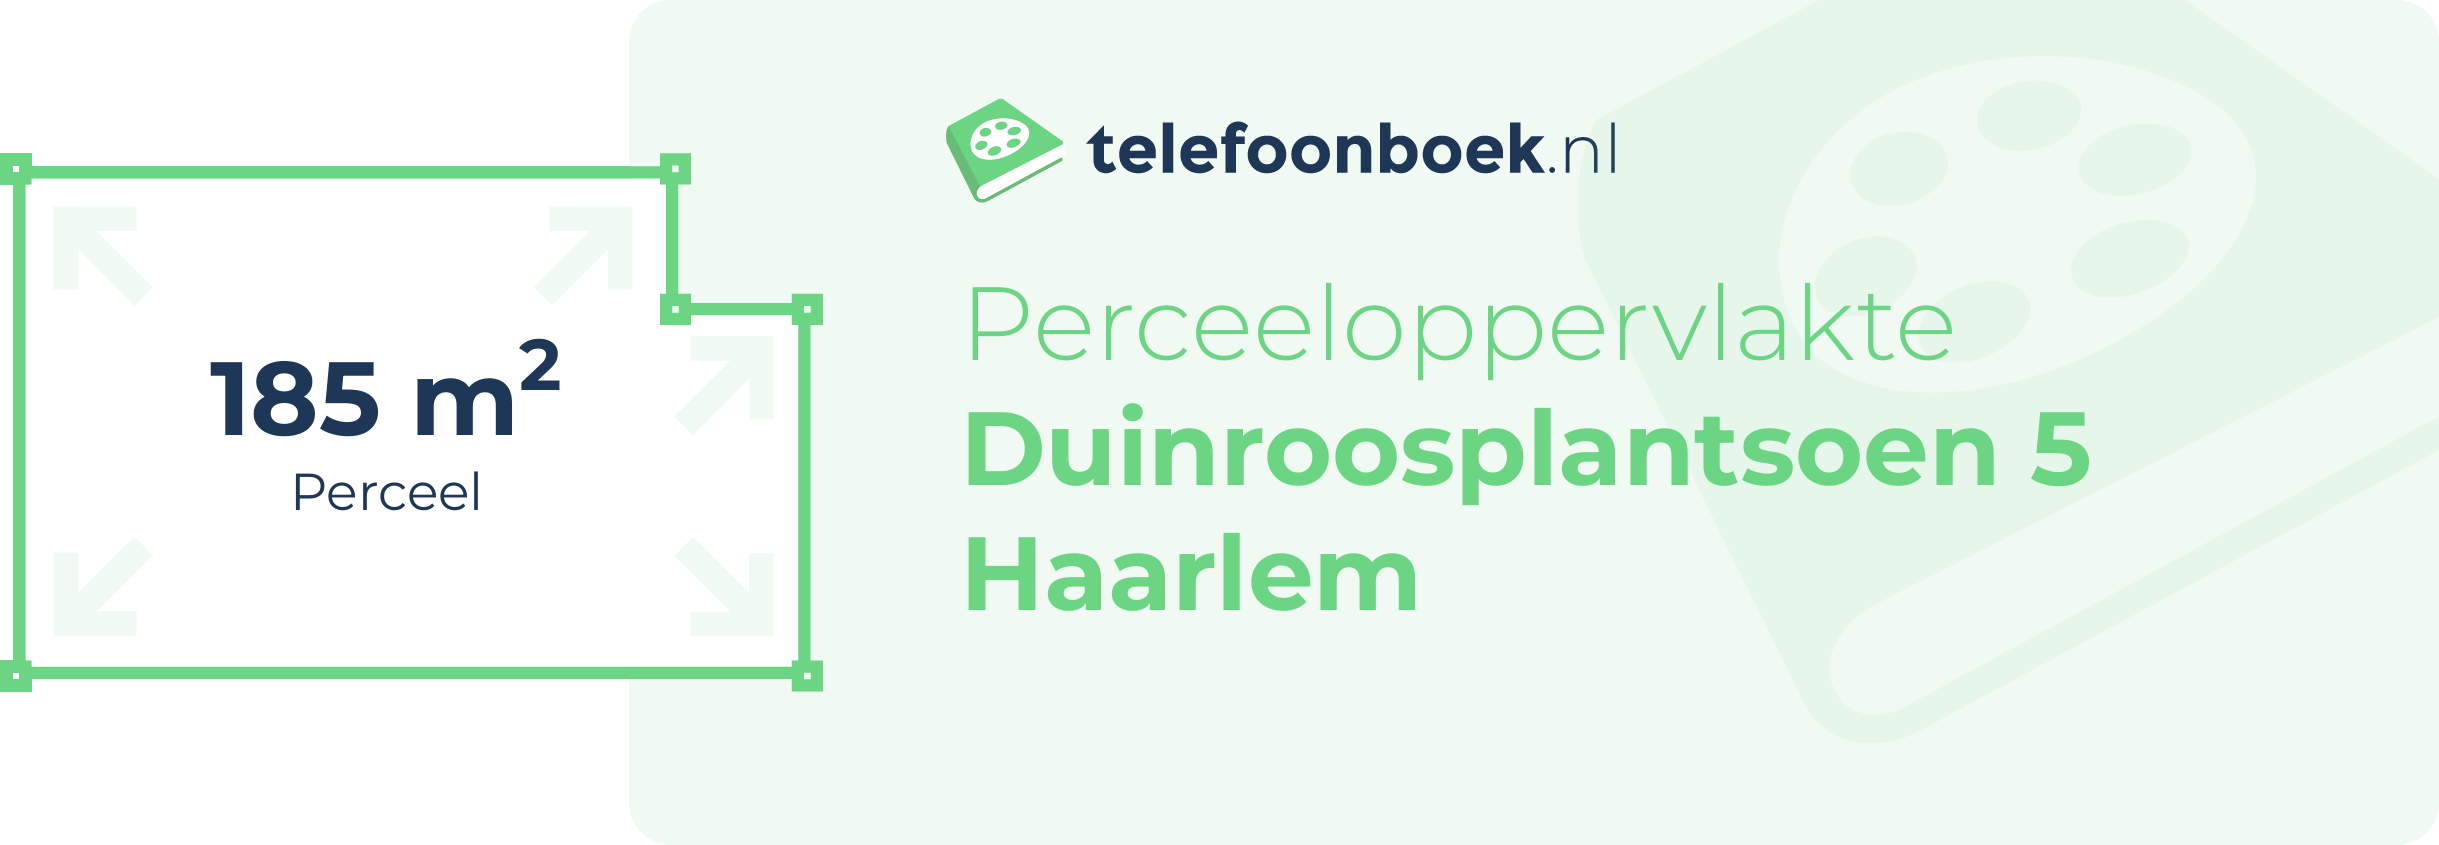 Perceeloppervlakte Duinroosplantsoen 5 Haarlem